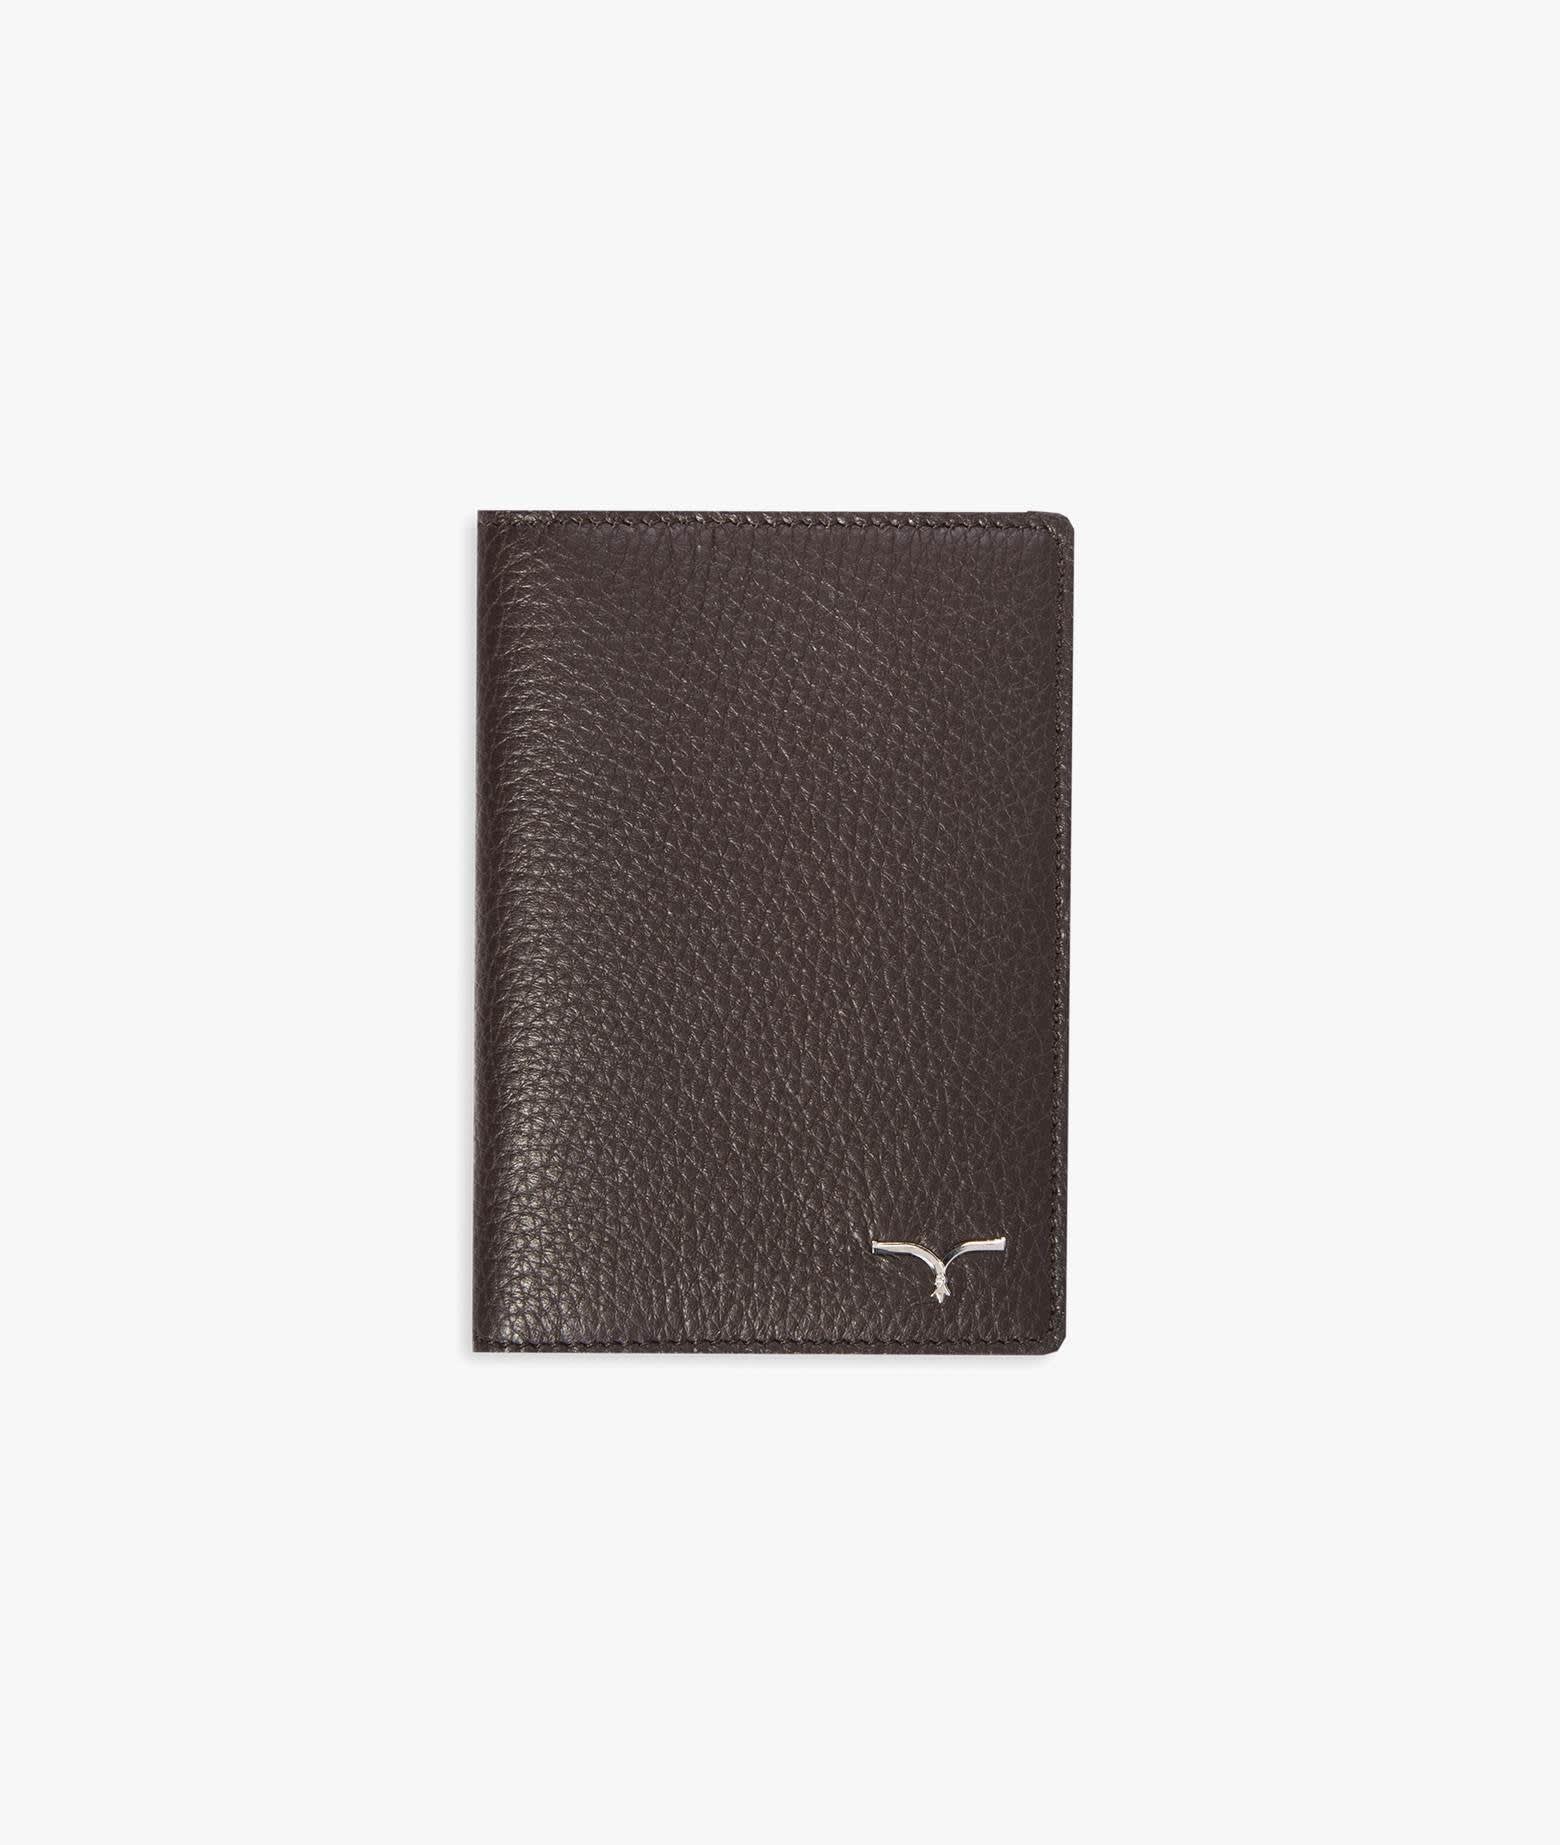 Larusmiani Passport Cover Fiumicino Wallet In Chocolate